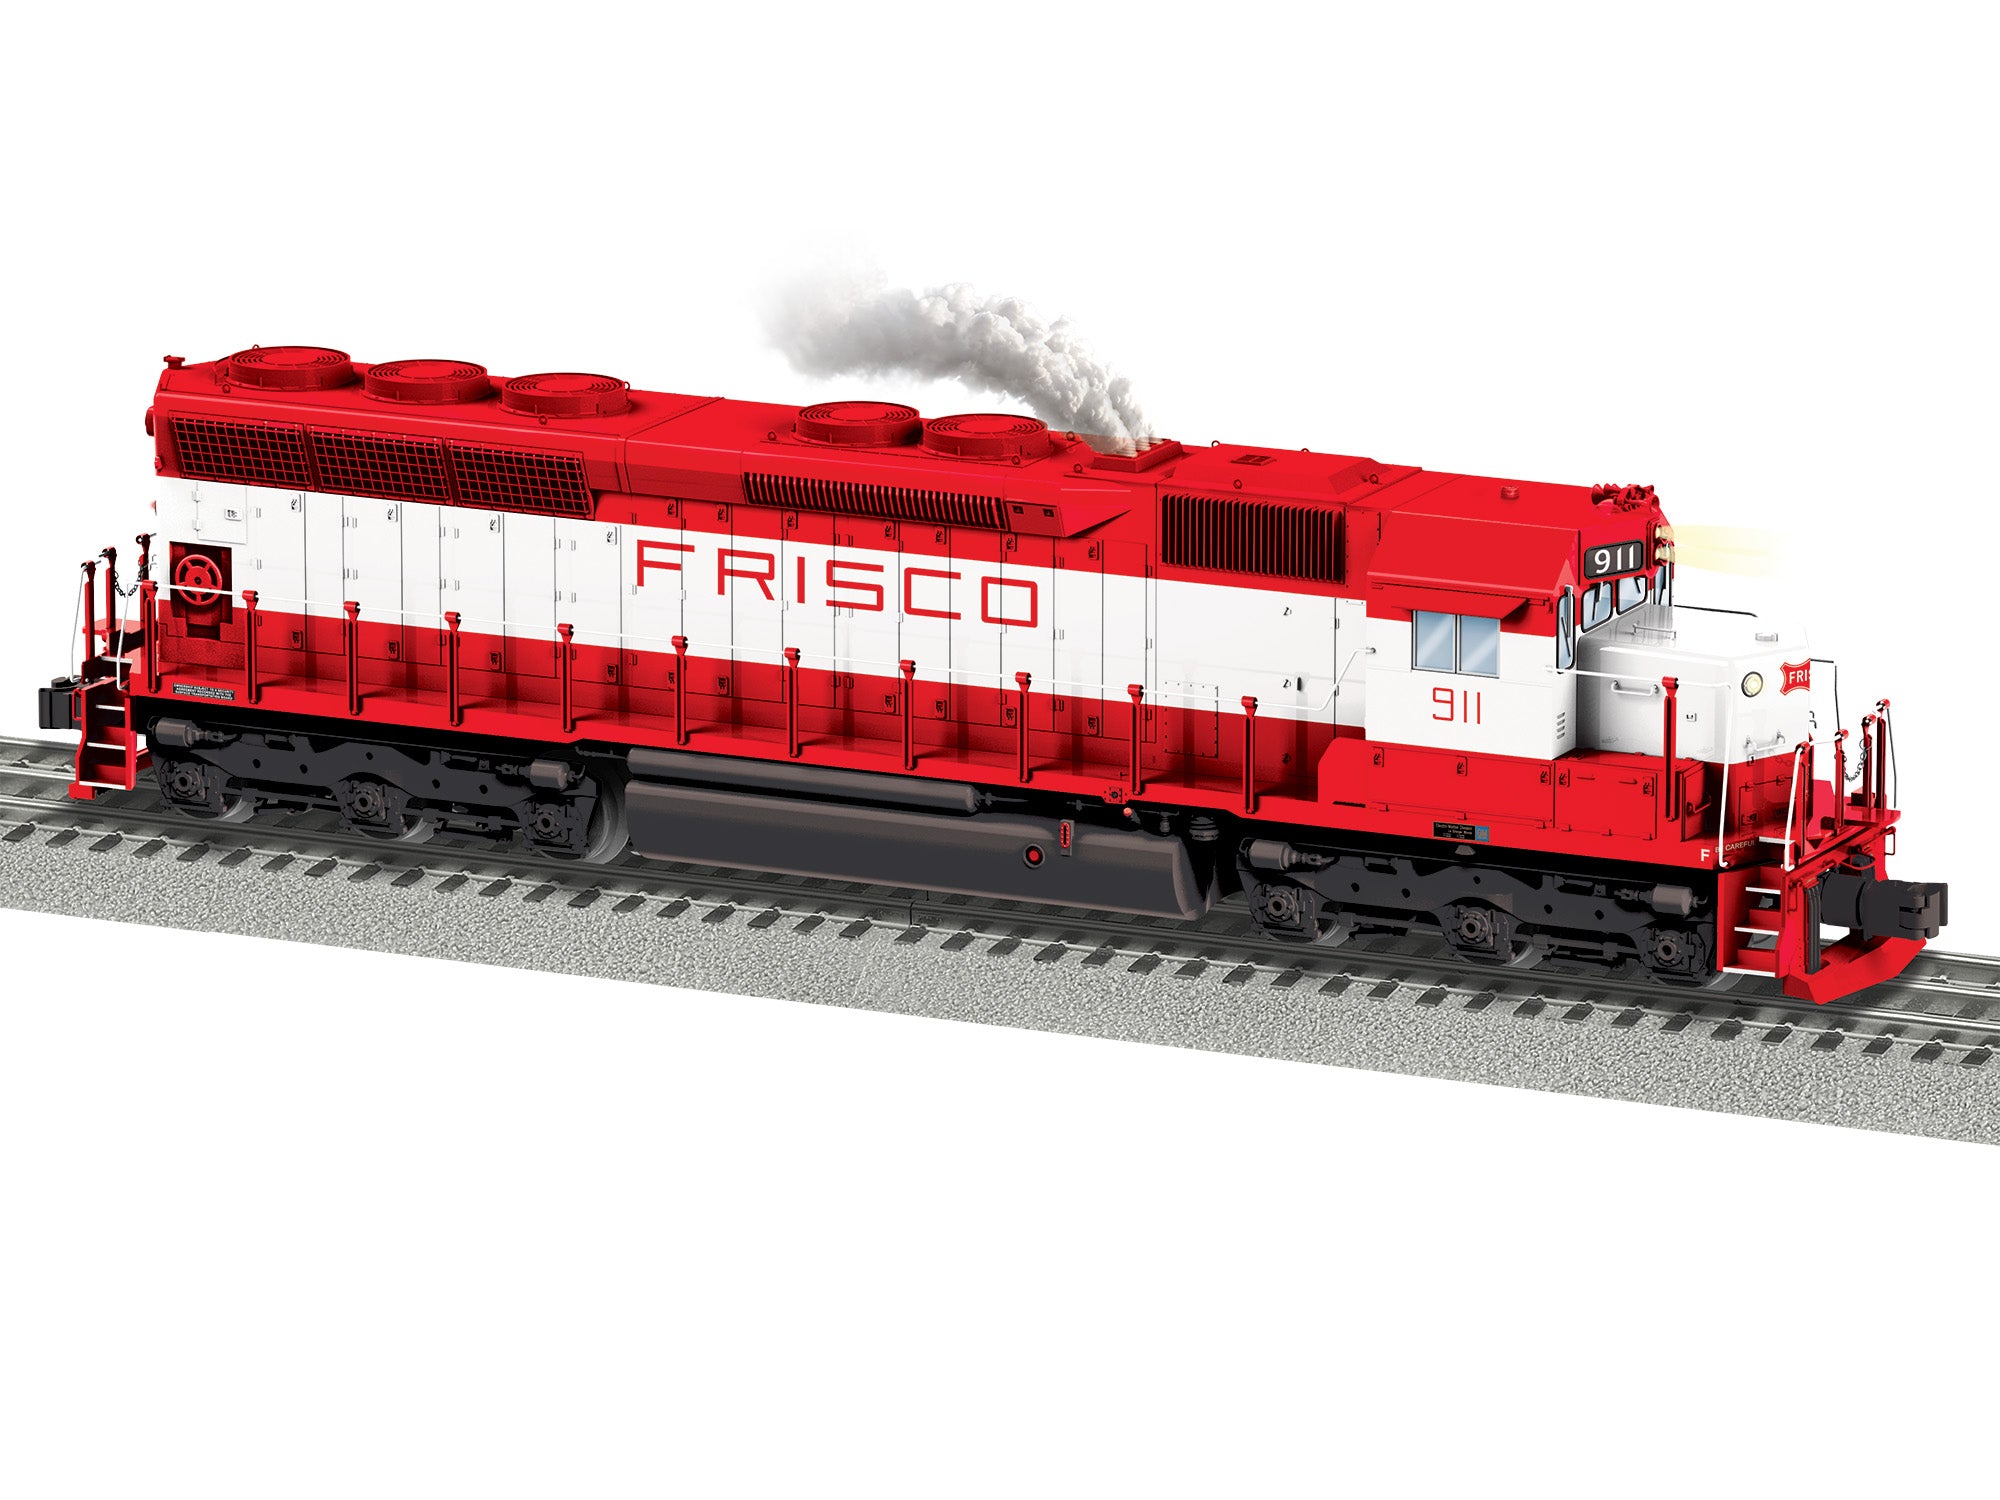 Lionel 2433561 - Legacy SD45 Diesel Locomotive "Frisco" #911